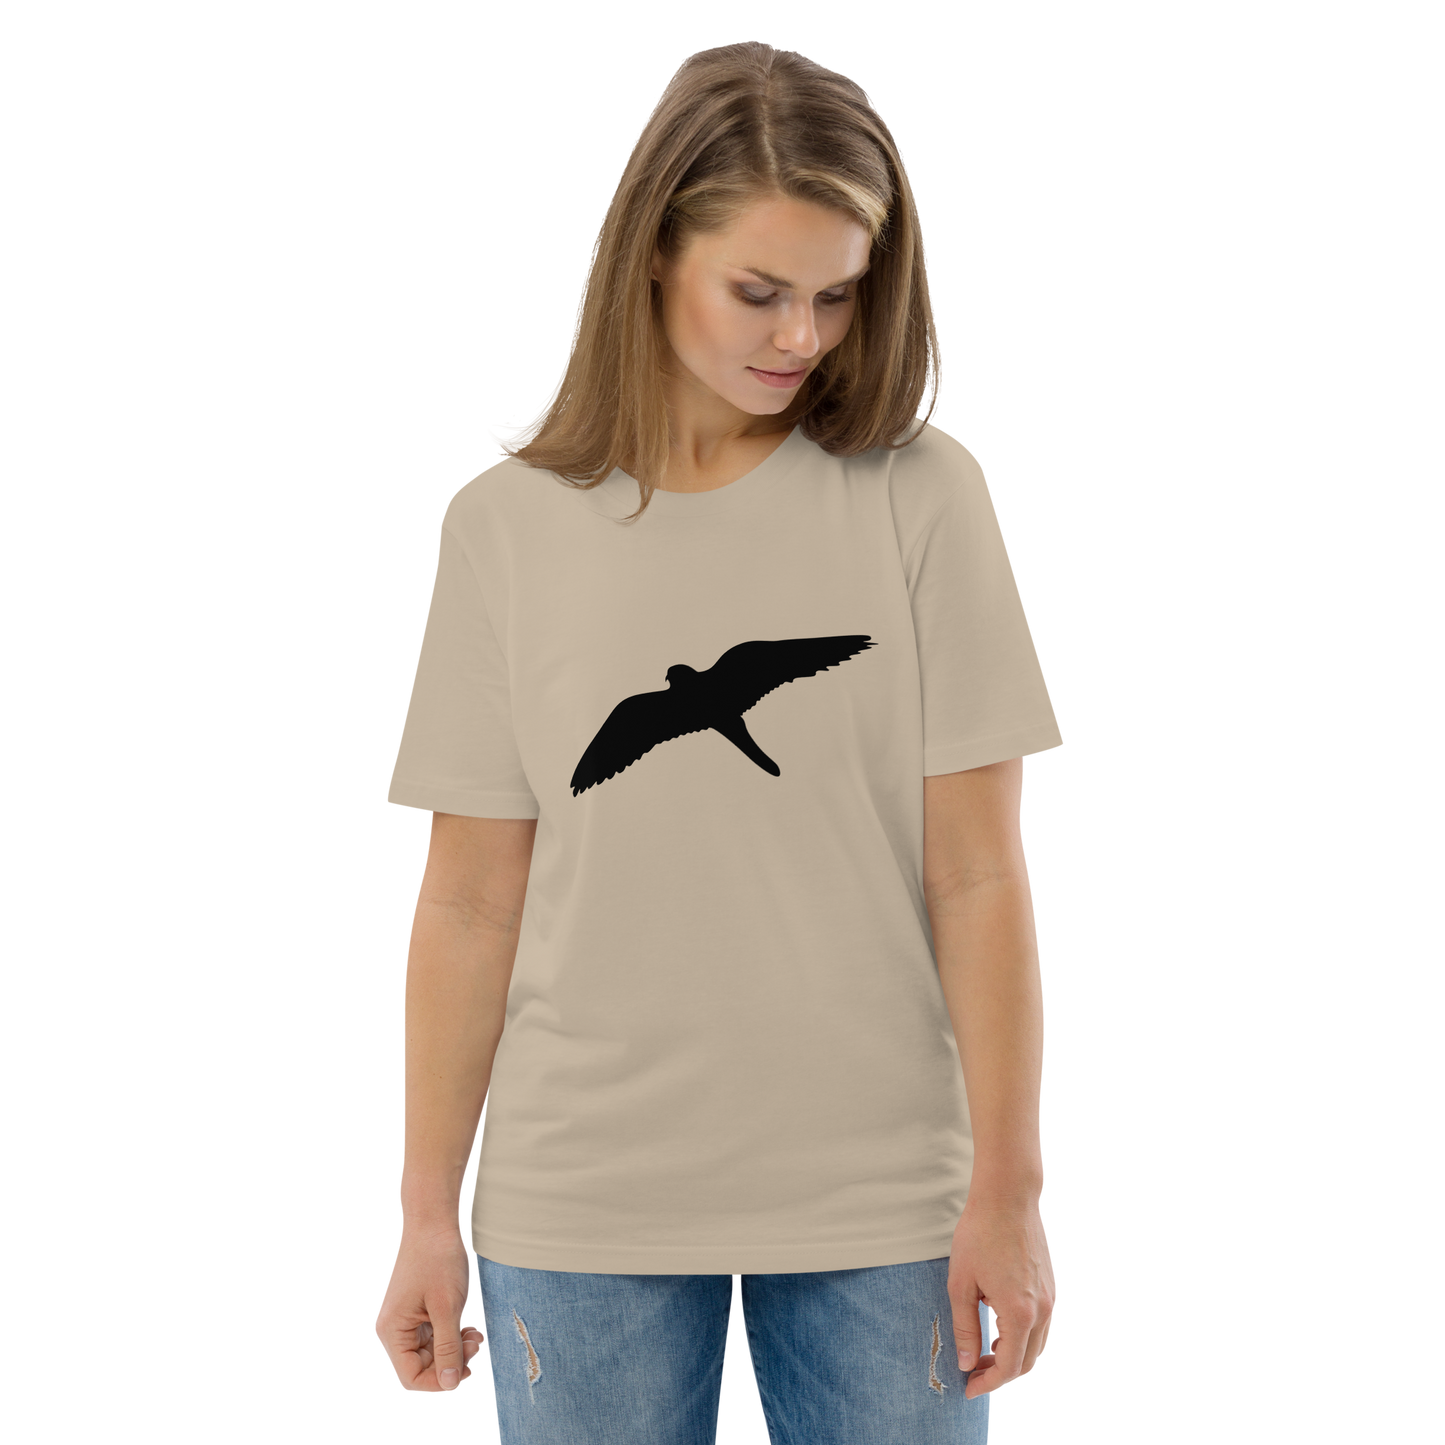 Falke Silhouette Unisex-Bio-Baumwoll-T-Shirt